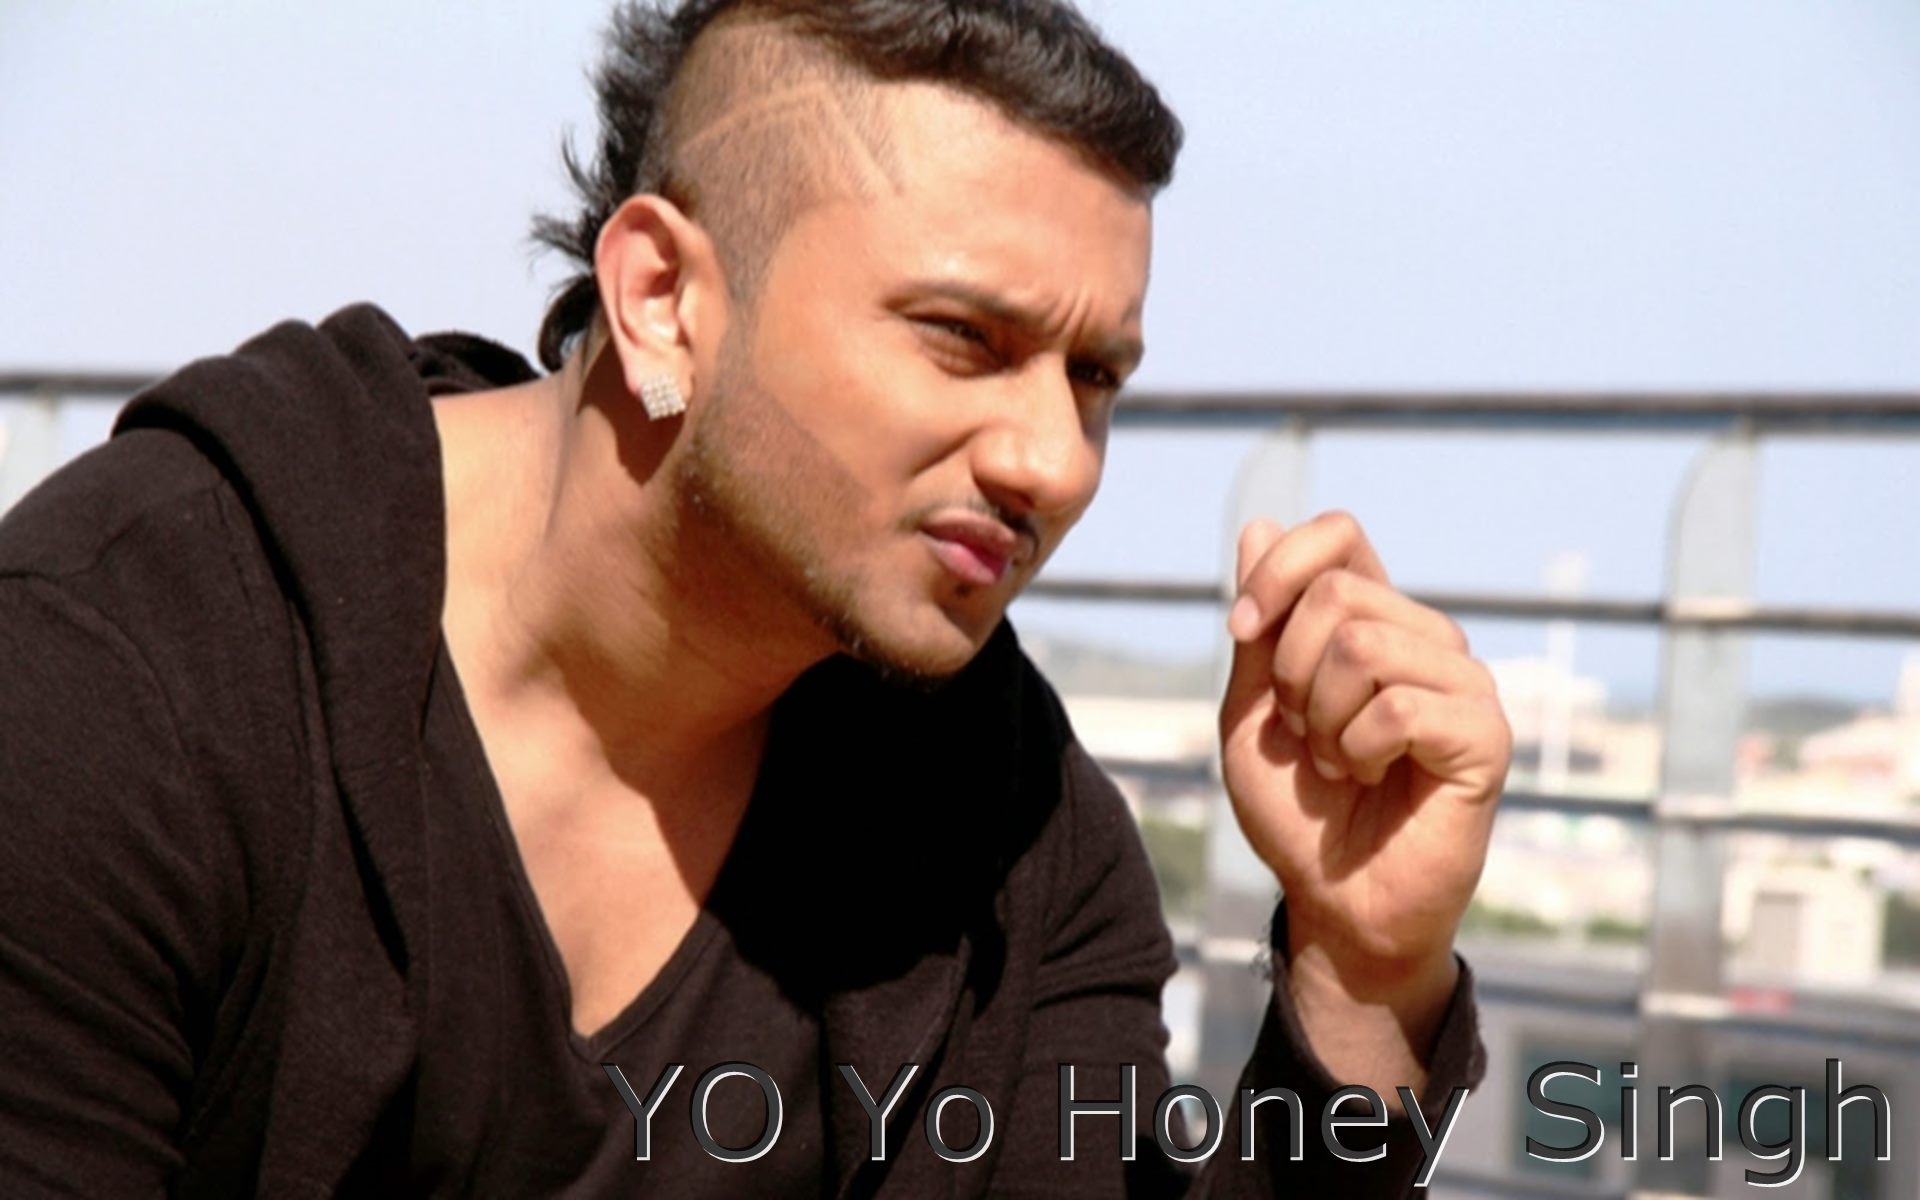 Hairstyle Yoyo Honey Singh - 1920x1200 Wallpaper 